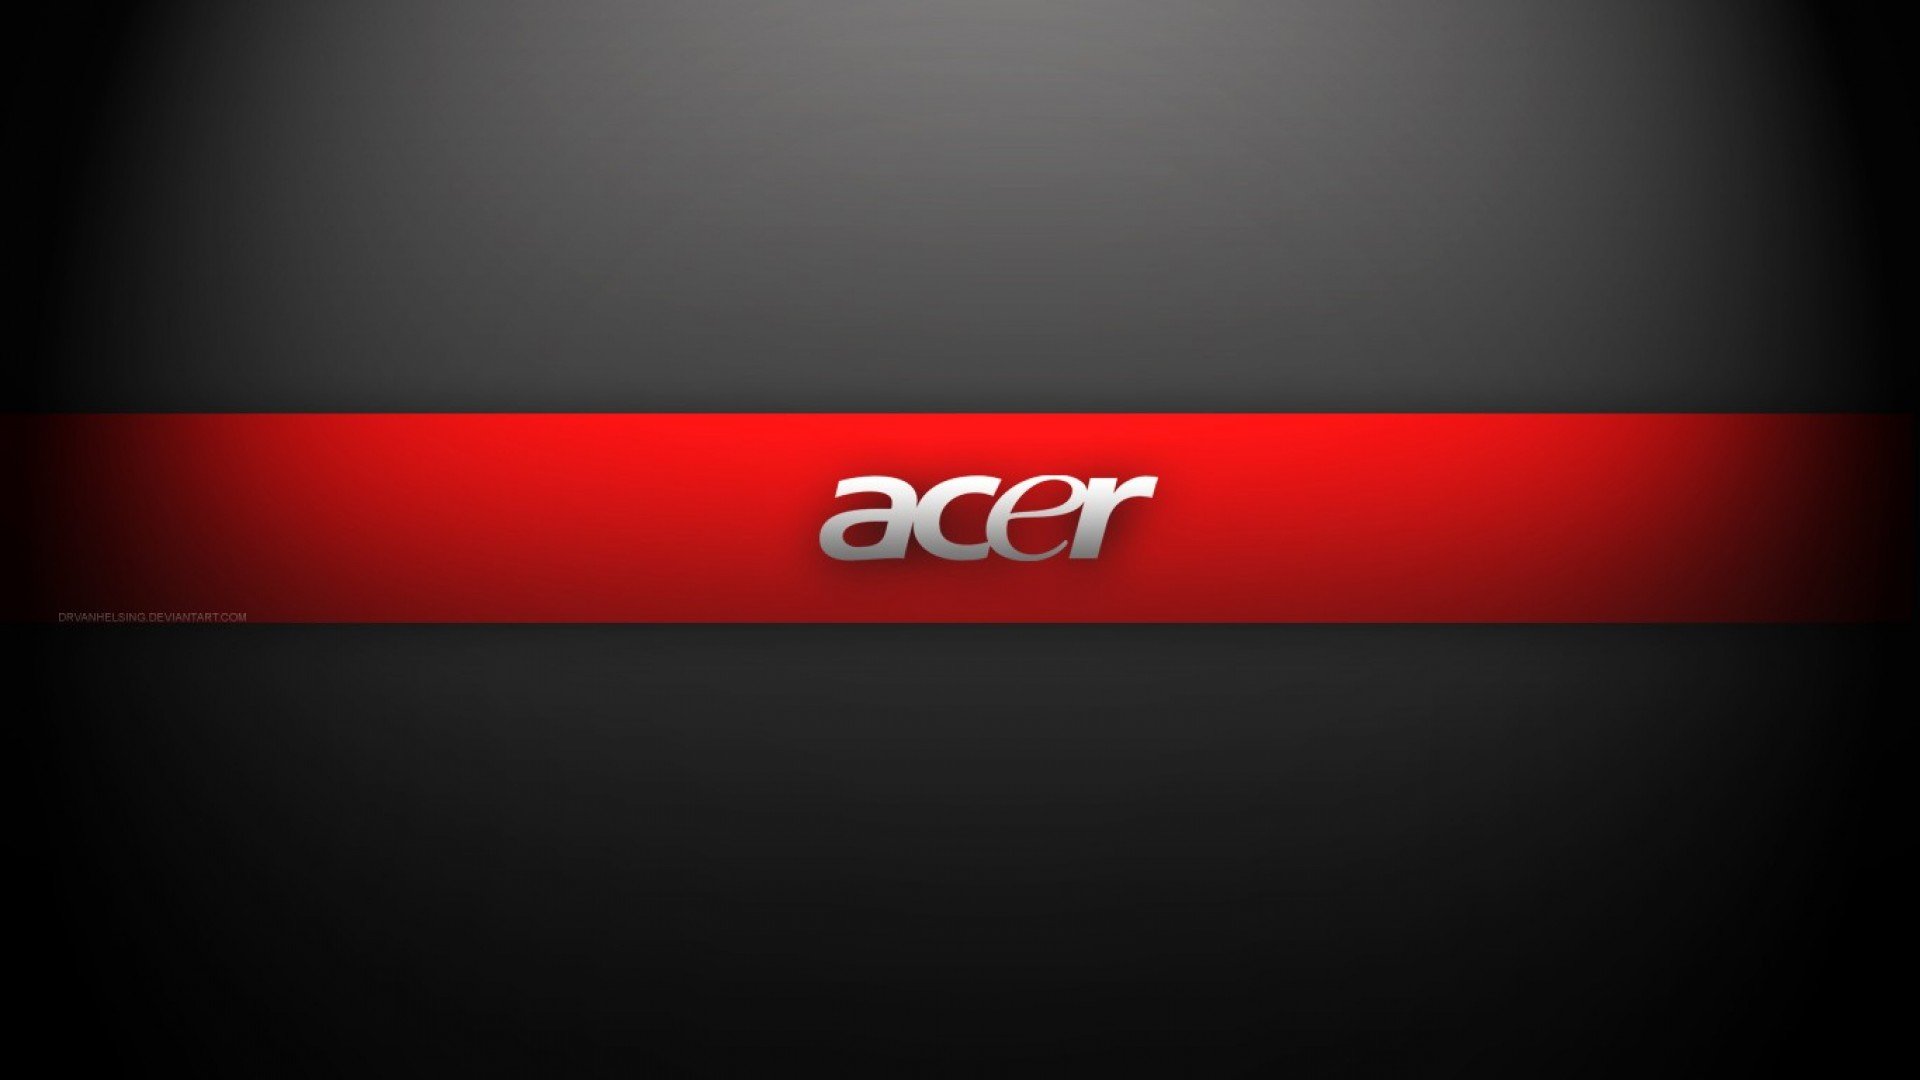 Acer Puter Wallpaper HD Desktop And Mobile Background